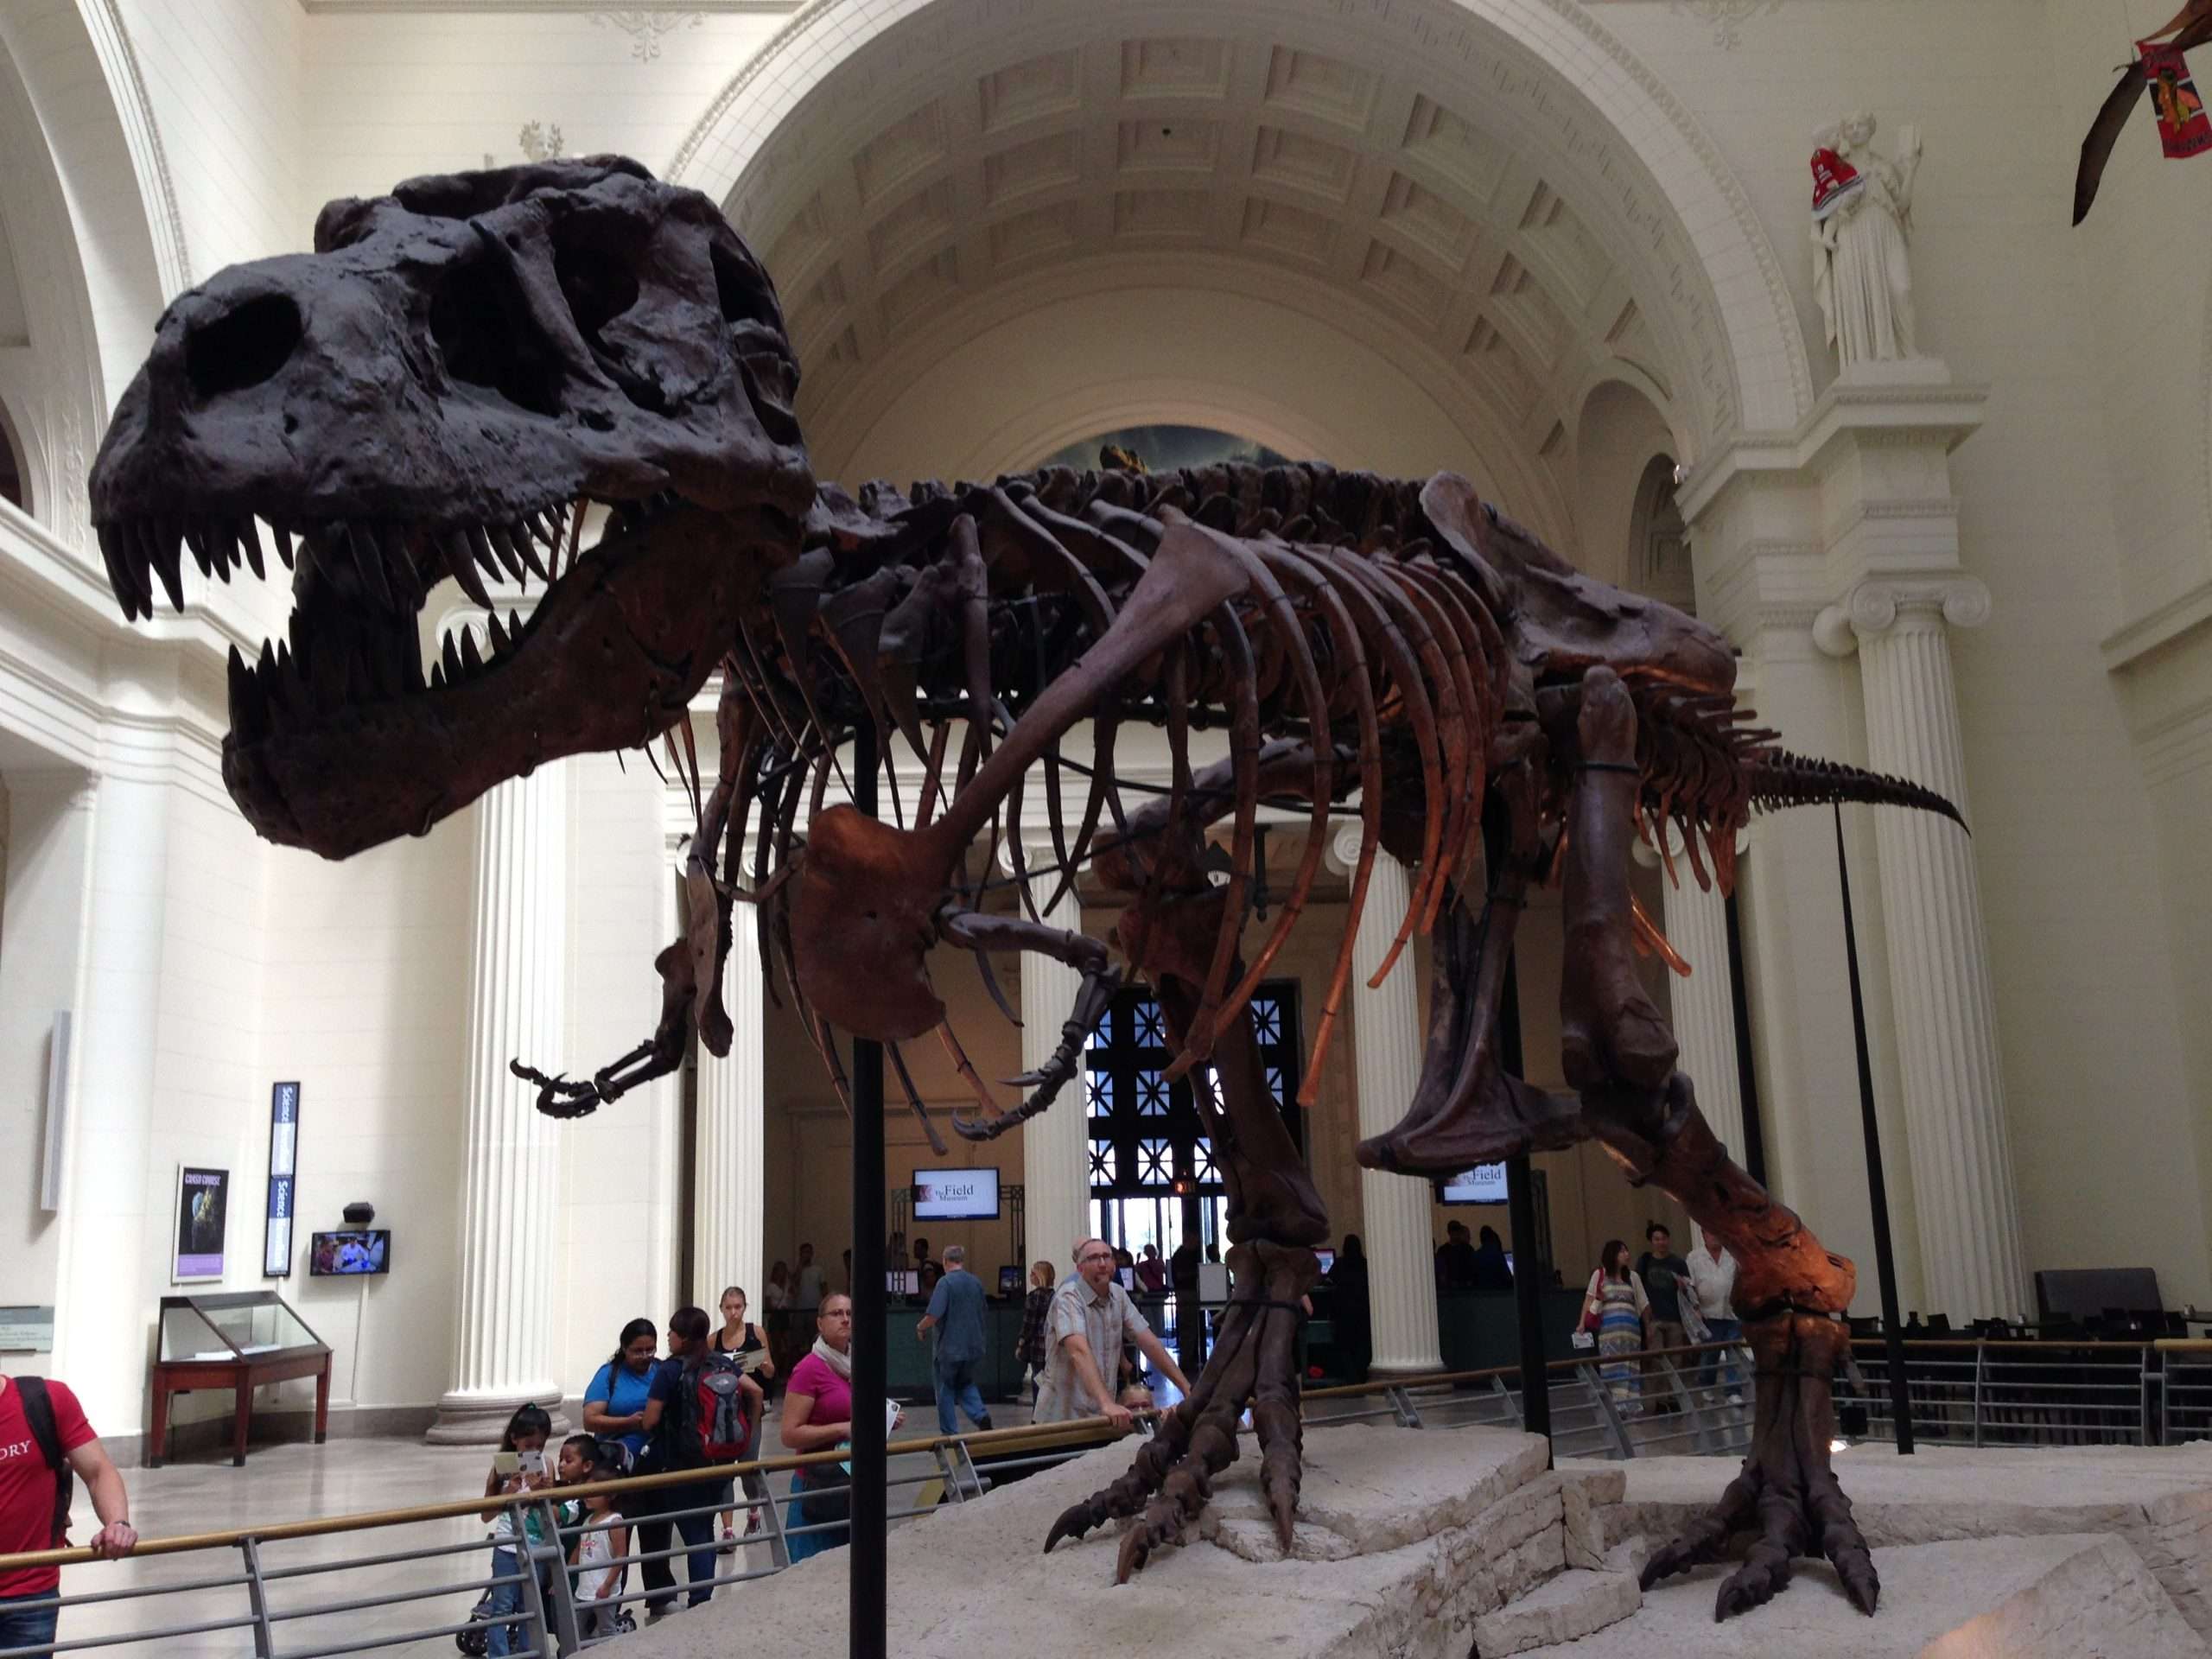 Dinosaur Museum Exhibits in the US